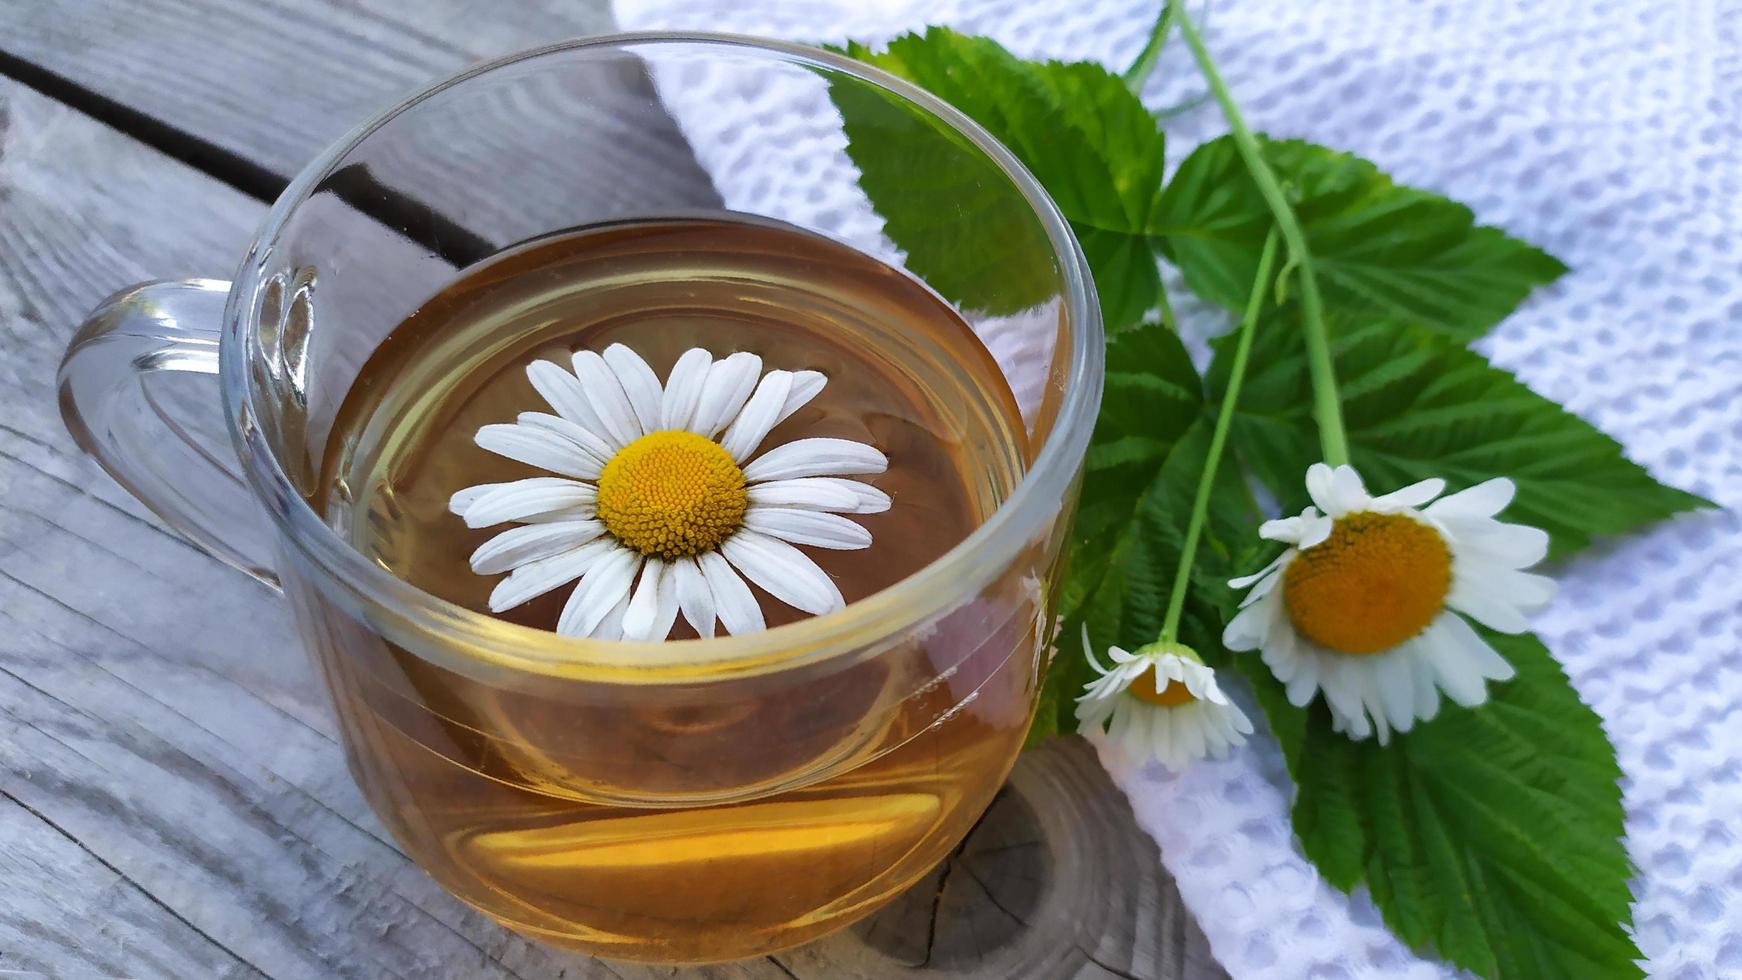 té de manzanilla y flores. taza de té sobre un fondo de madera foto